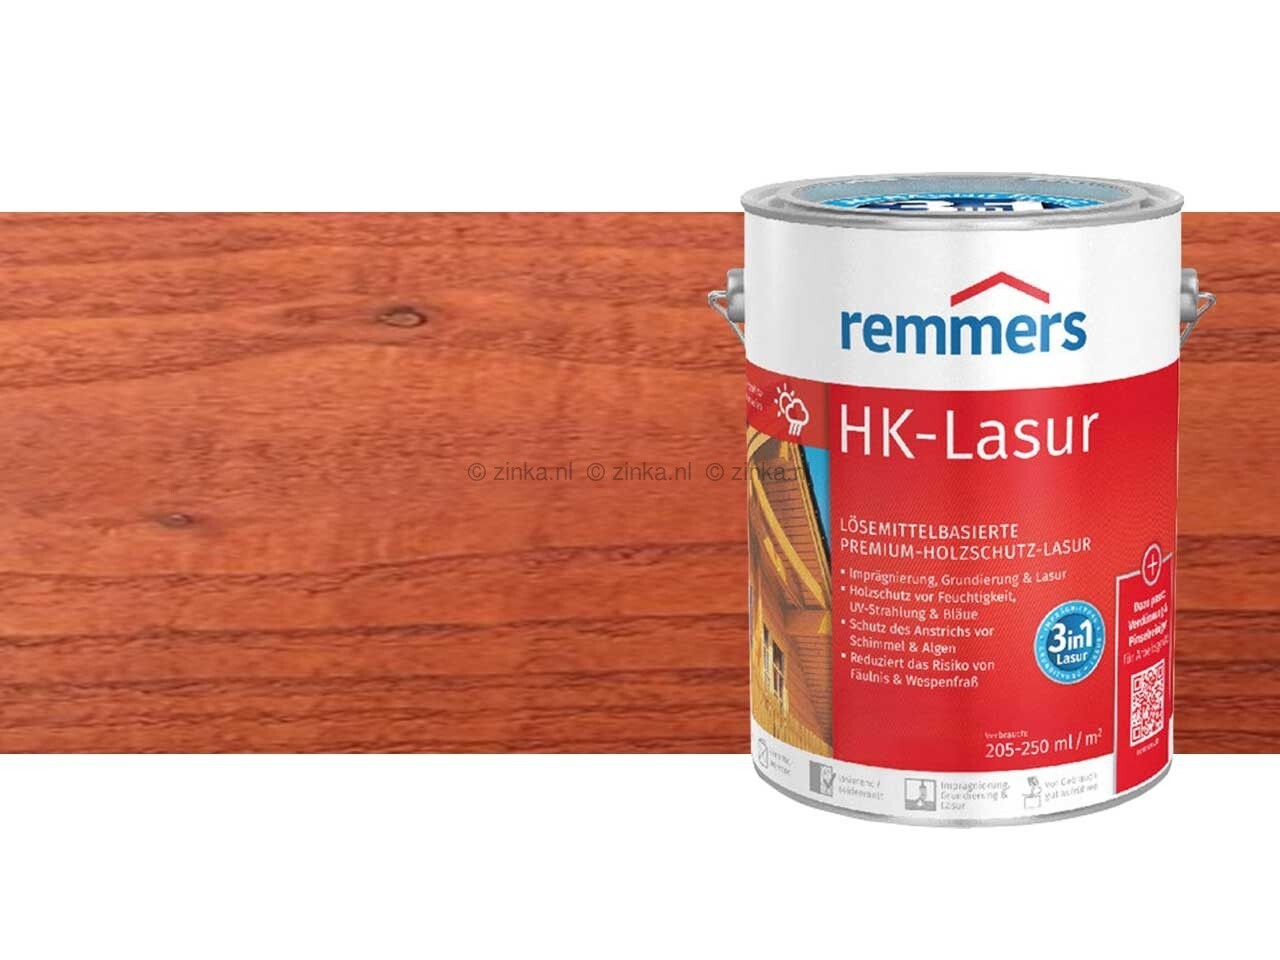 HK-Lazuur pine-lariks 100 ml proefverpakking